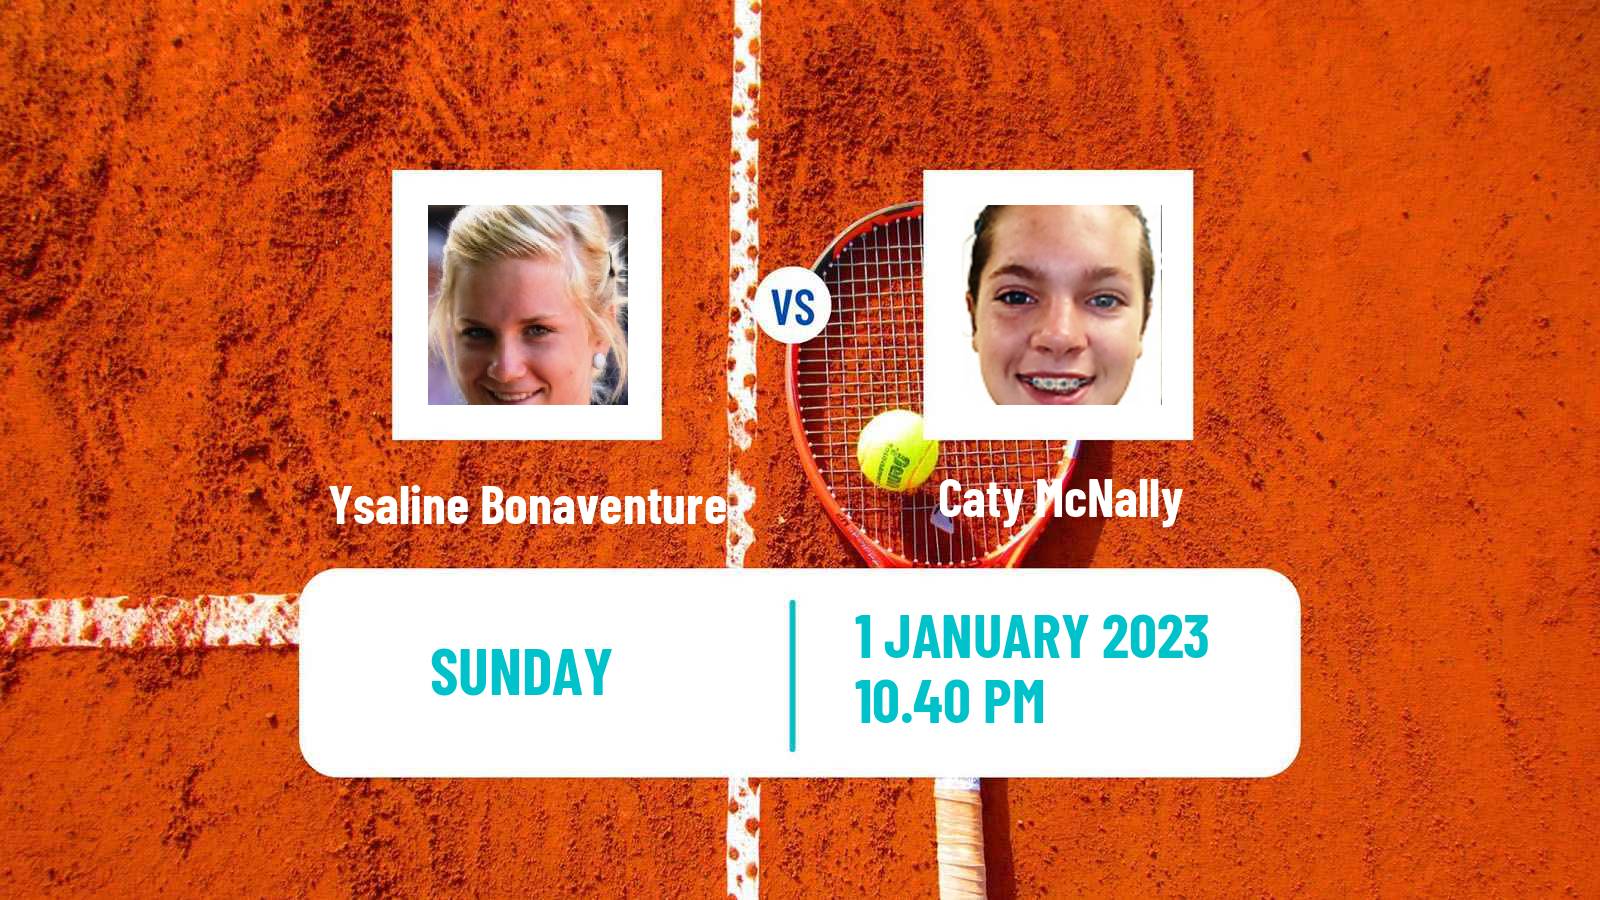 Tennis WTA Auckland Ysaline Bonaventure - Caty McNally